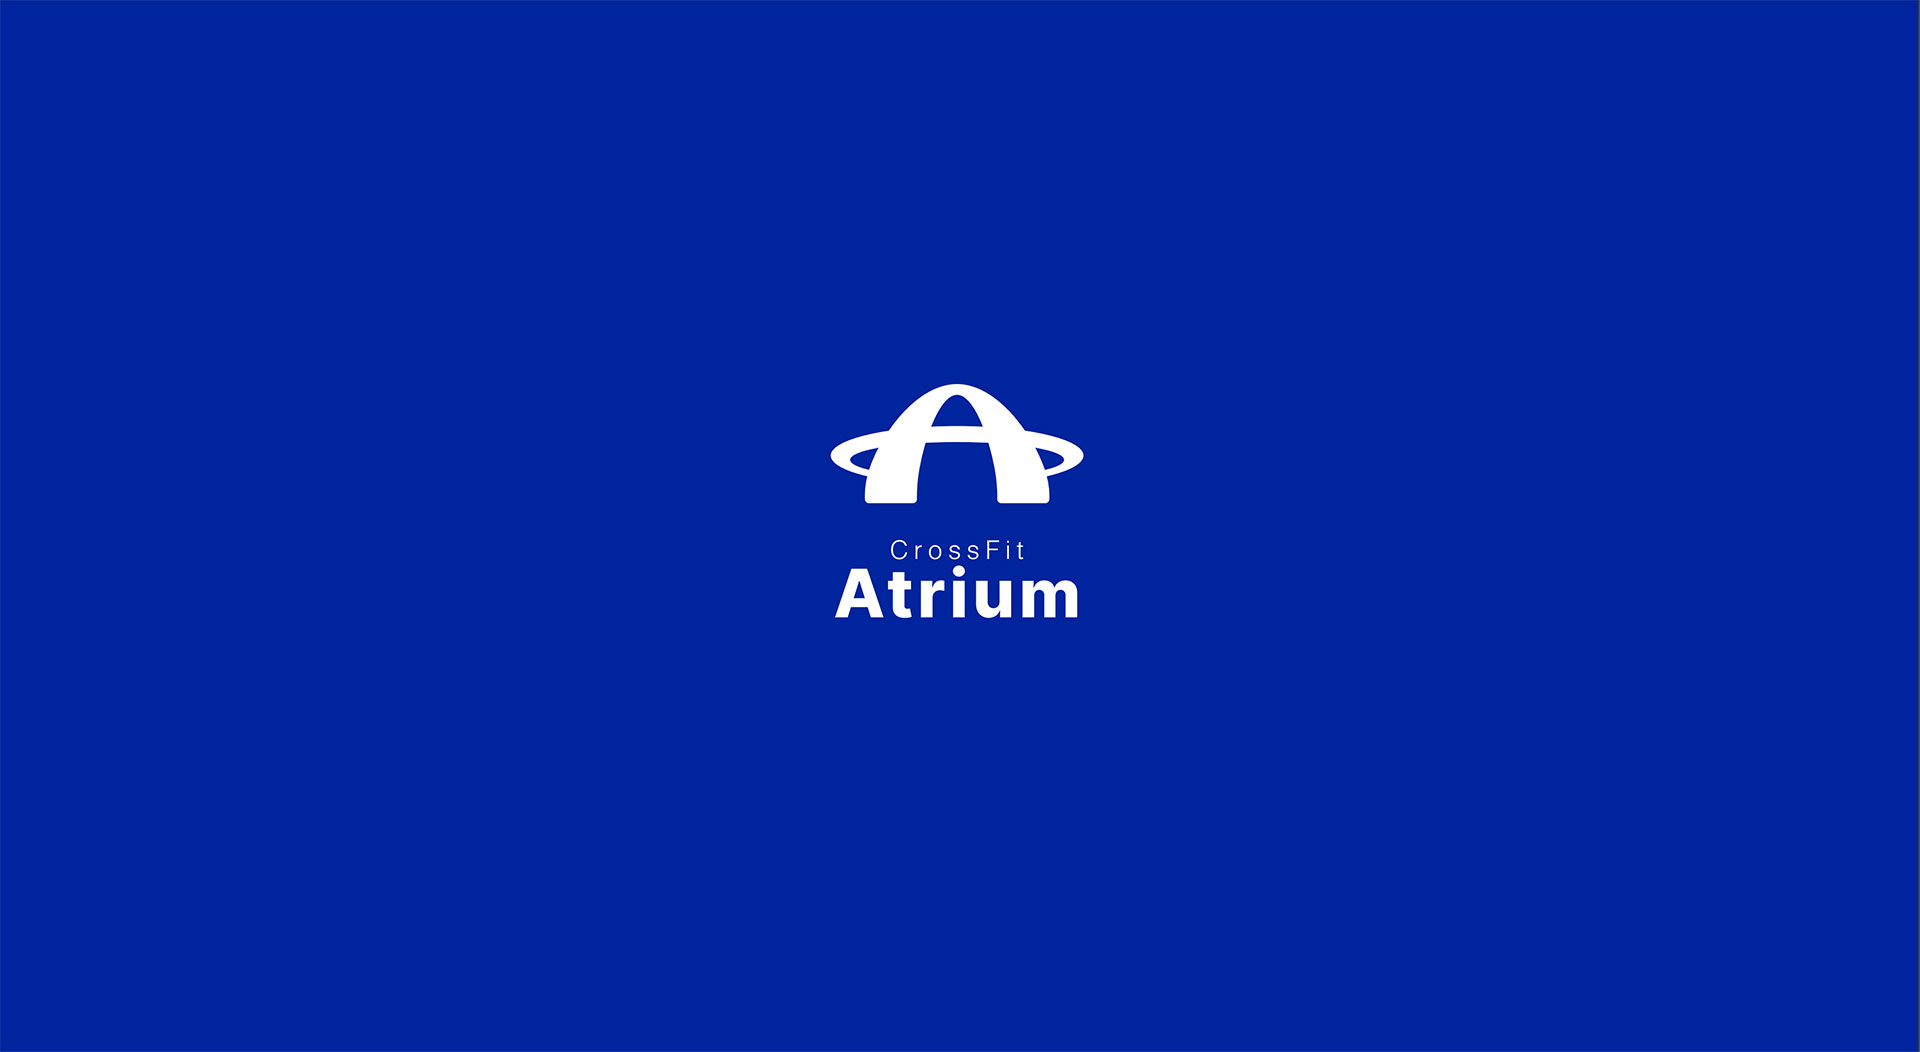 branding-ag2020-atrium-crossfit.jpg